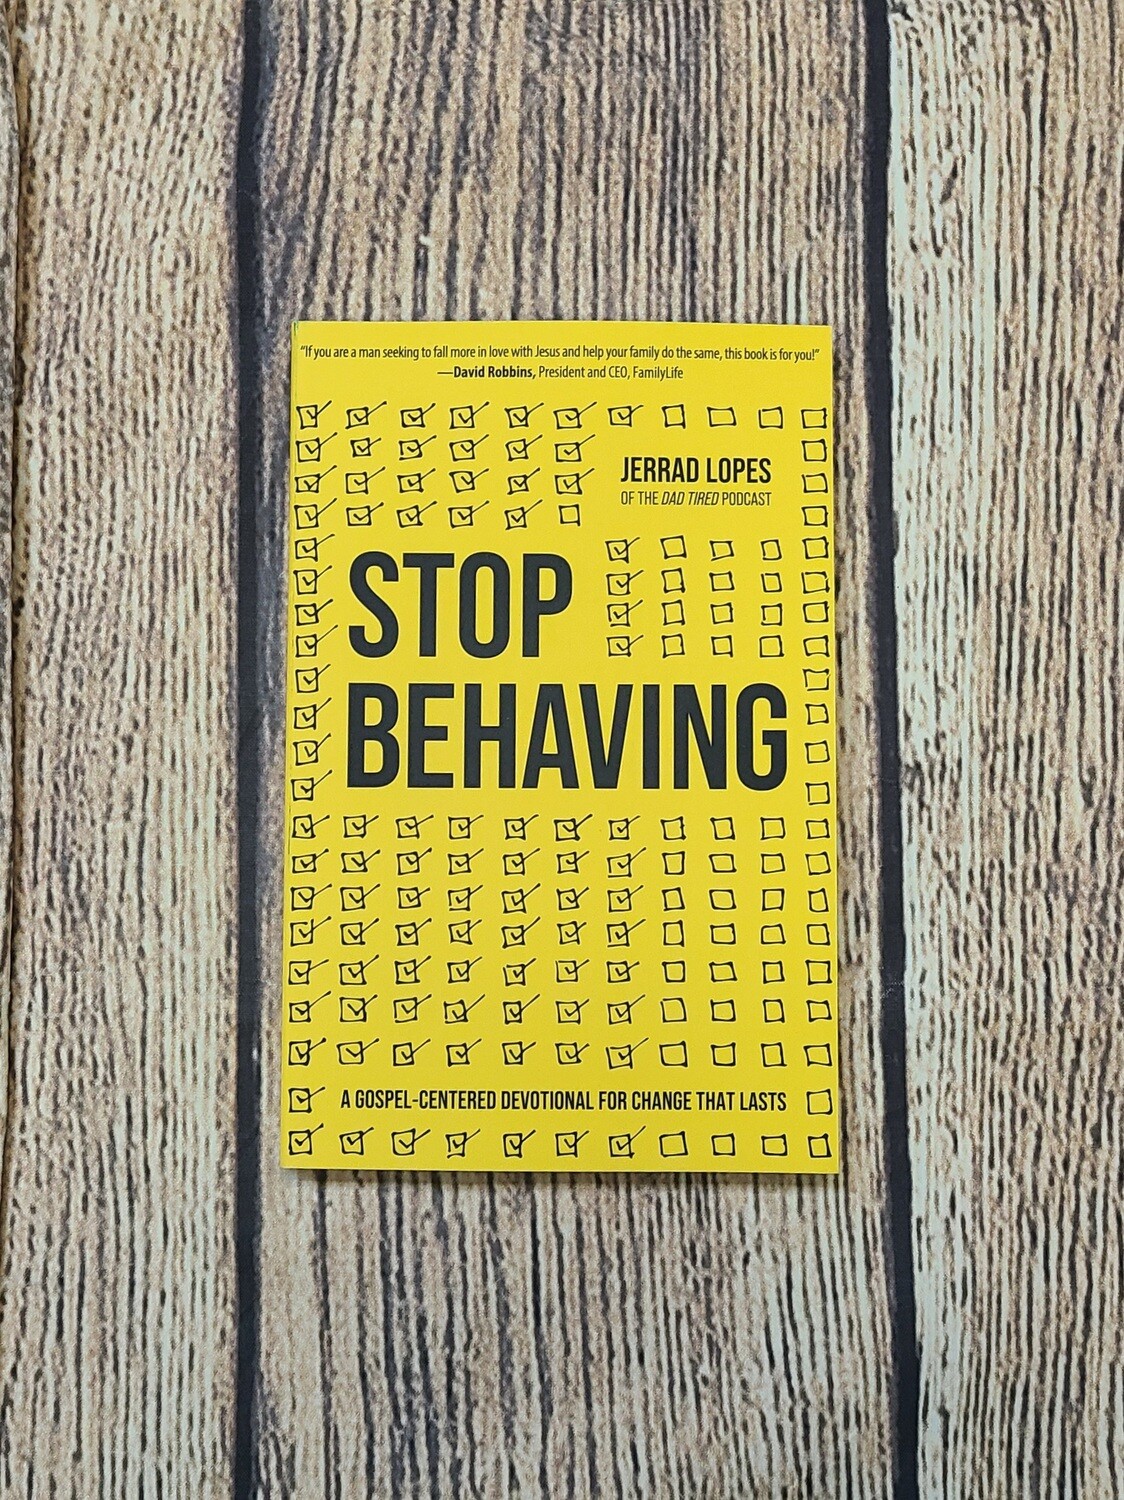 Stop Behaving: A Gospel-Centered Devotional for Change that Lasts by Jerrad Lopes - Paperback - New